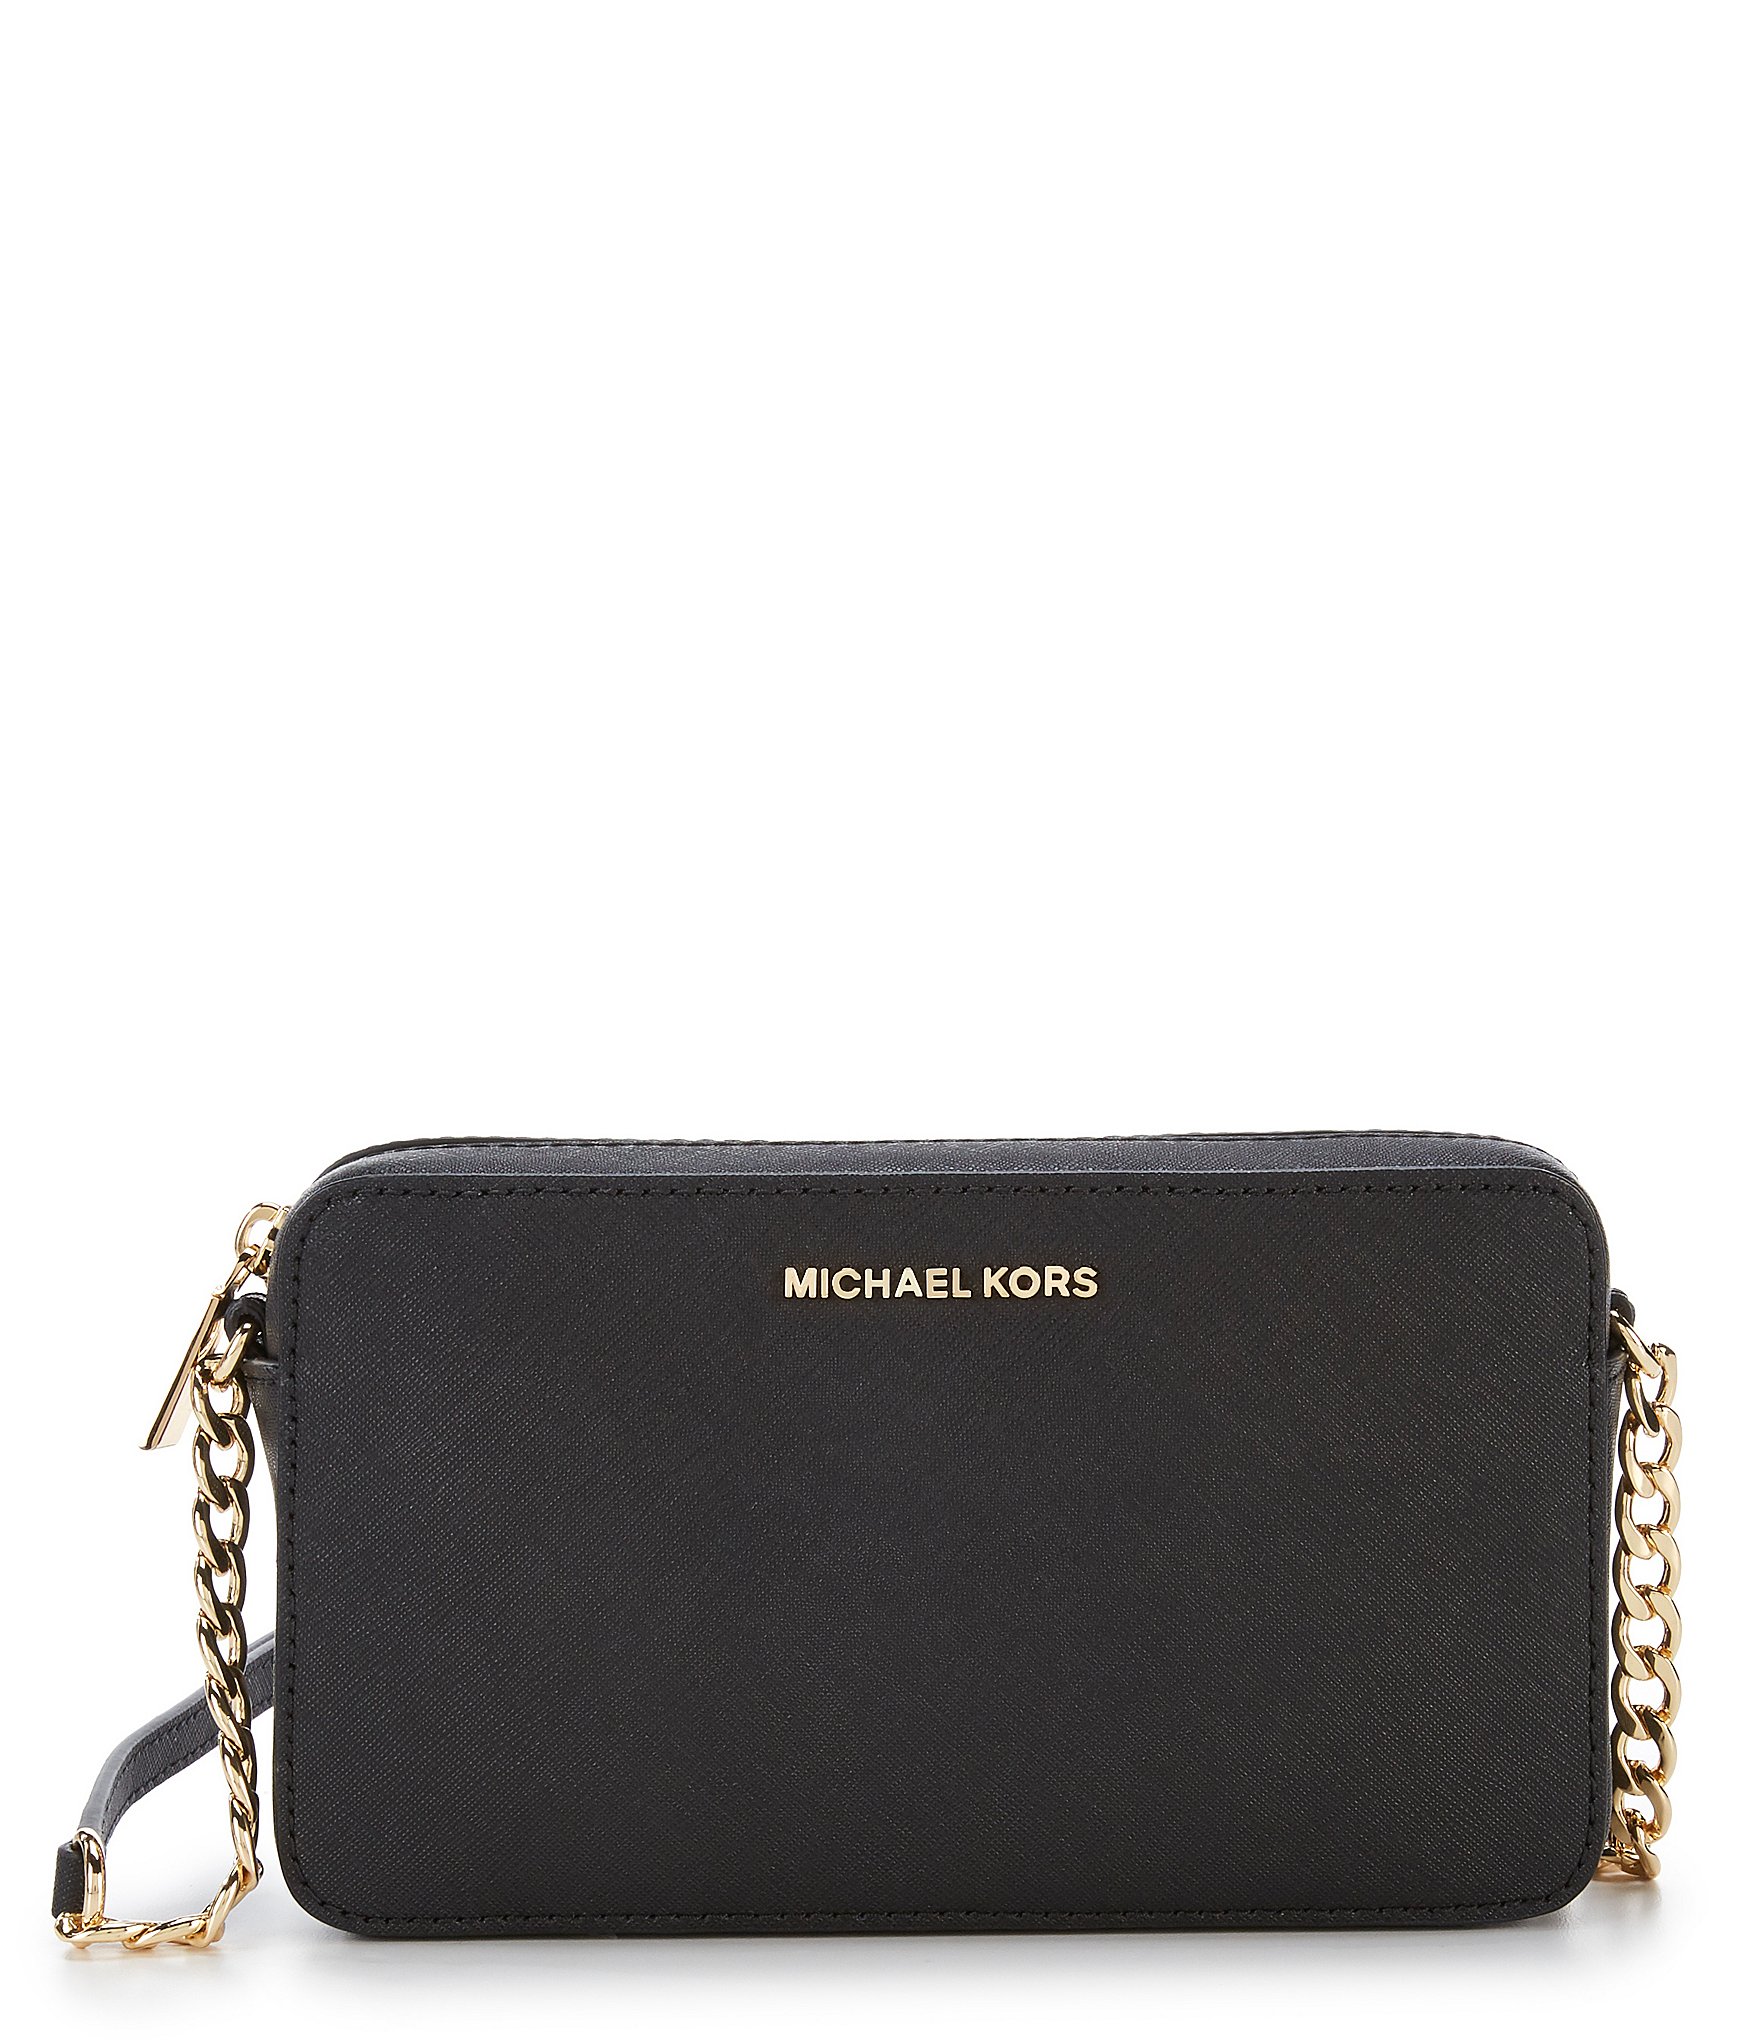 Michael Kors Handbags Sale Dillards | Handbag Reviews 2017